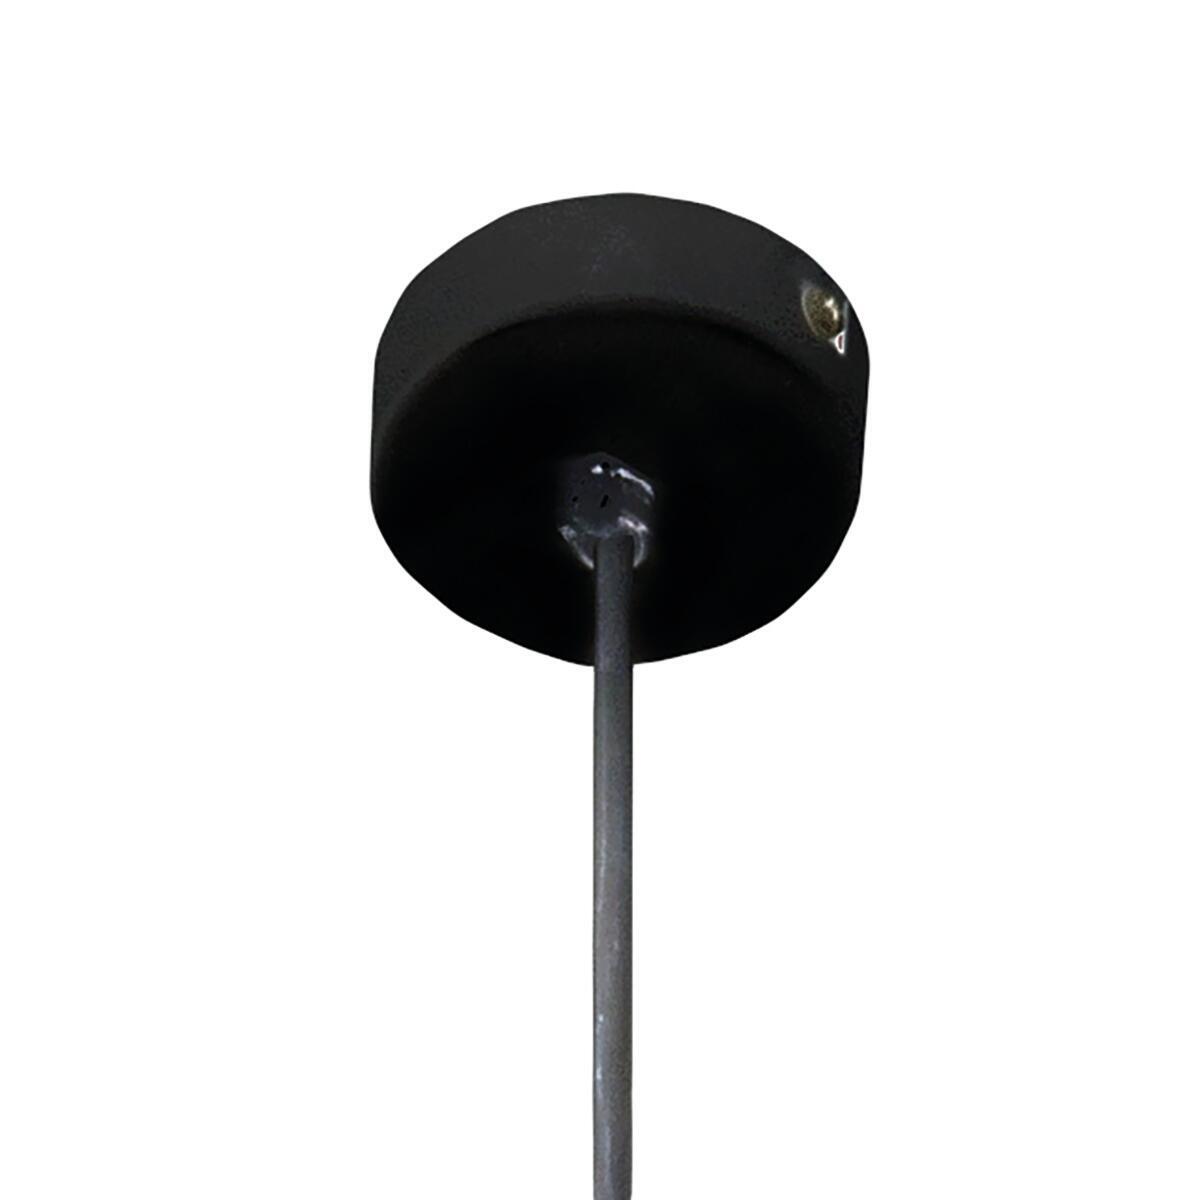 Lampadario Design Tubix nero in metallo, D. 8 cm, NOVECENTO - 3